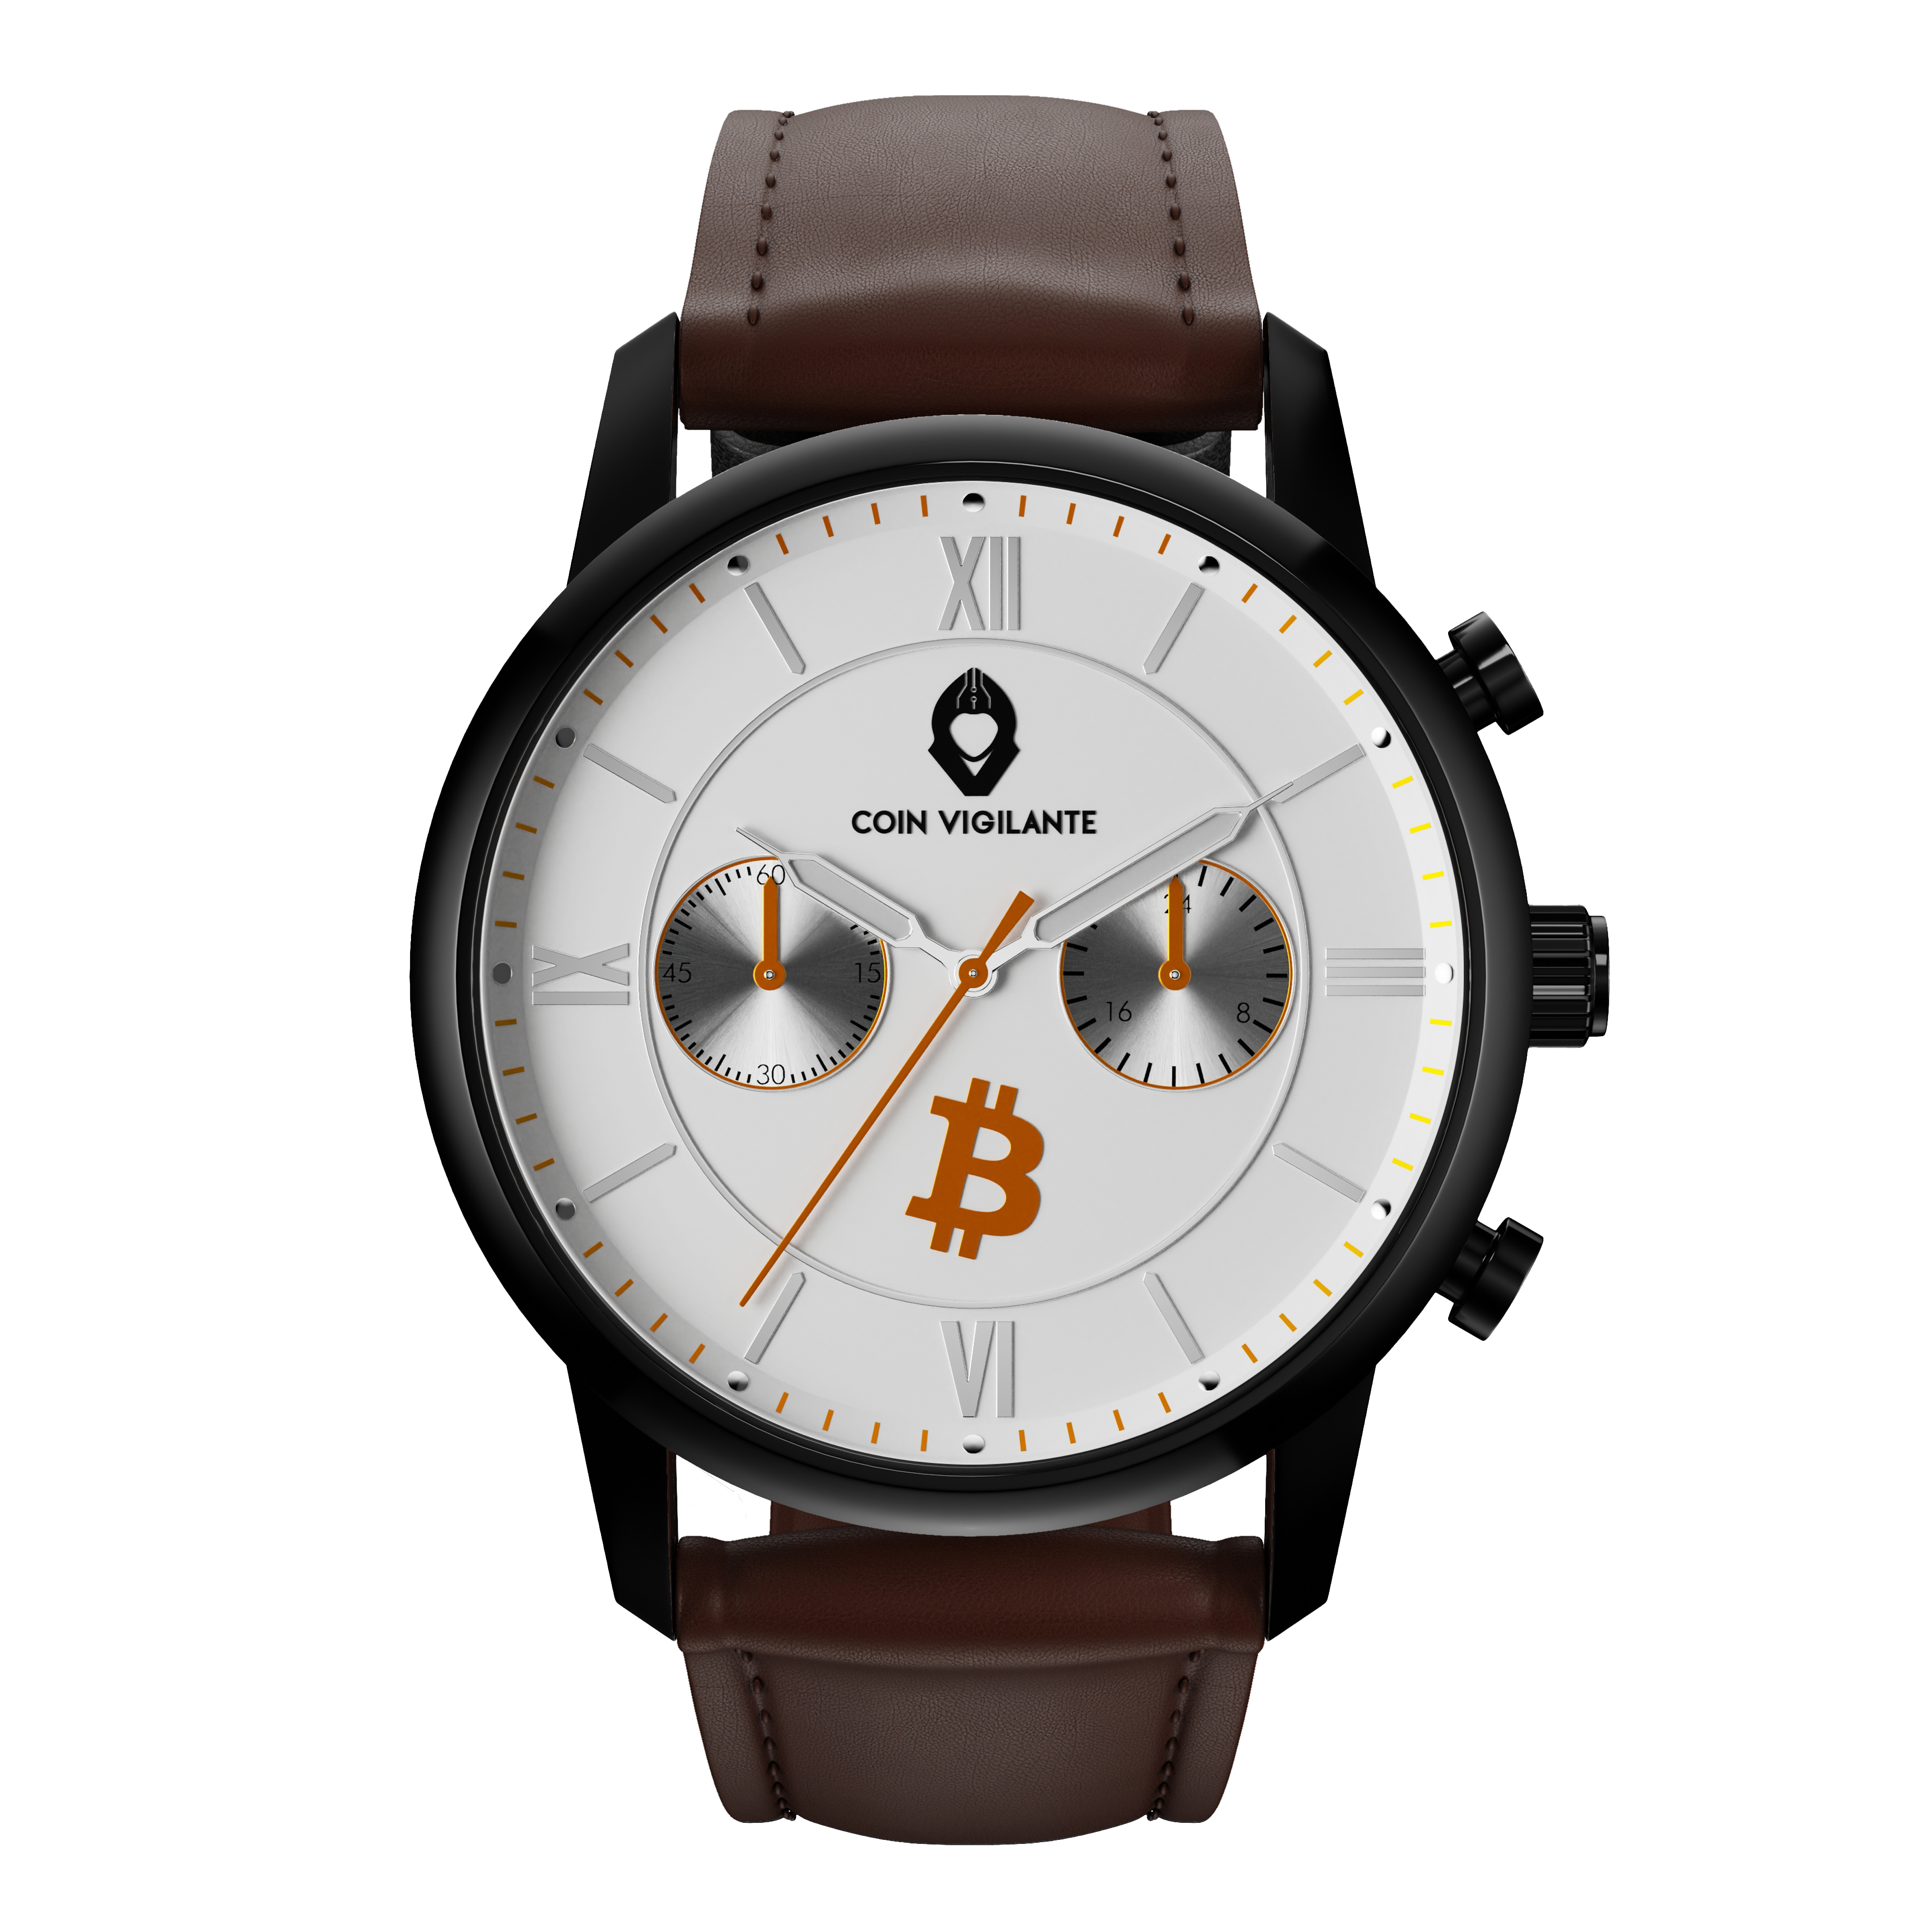 Coin Vigilante Bitcoin Watch Model D - A Statement of Sound Money